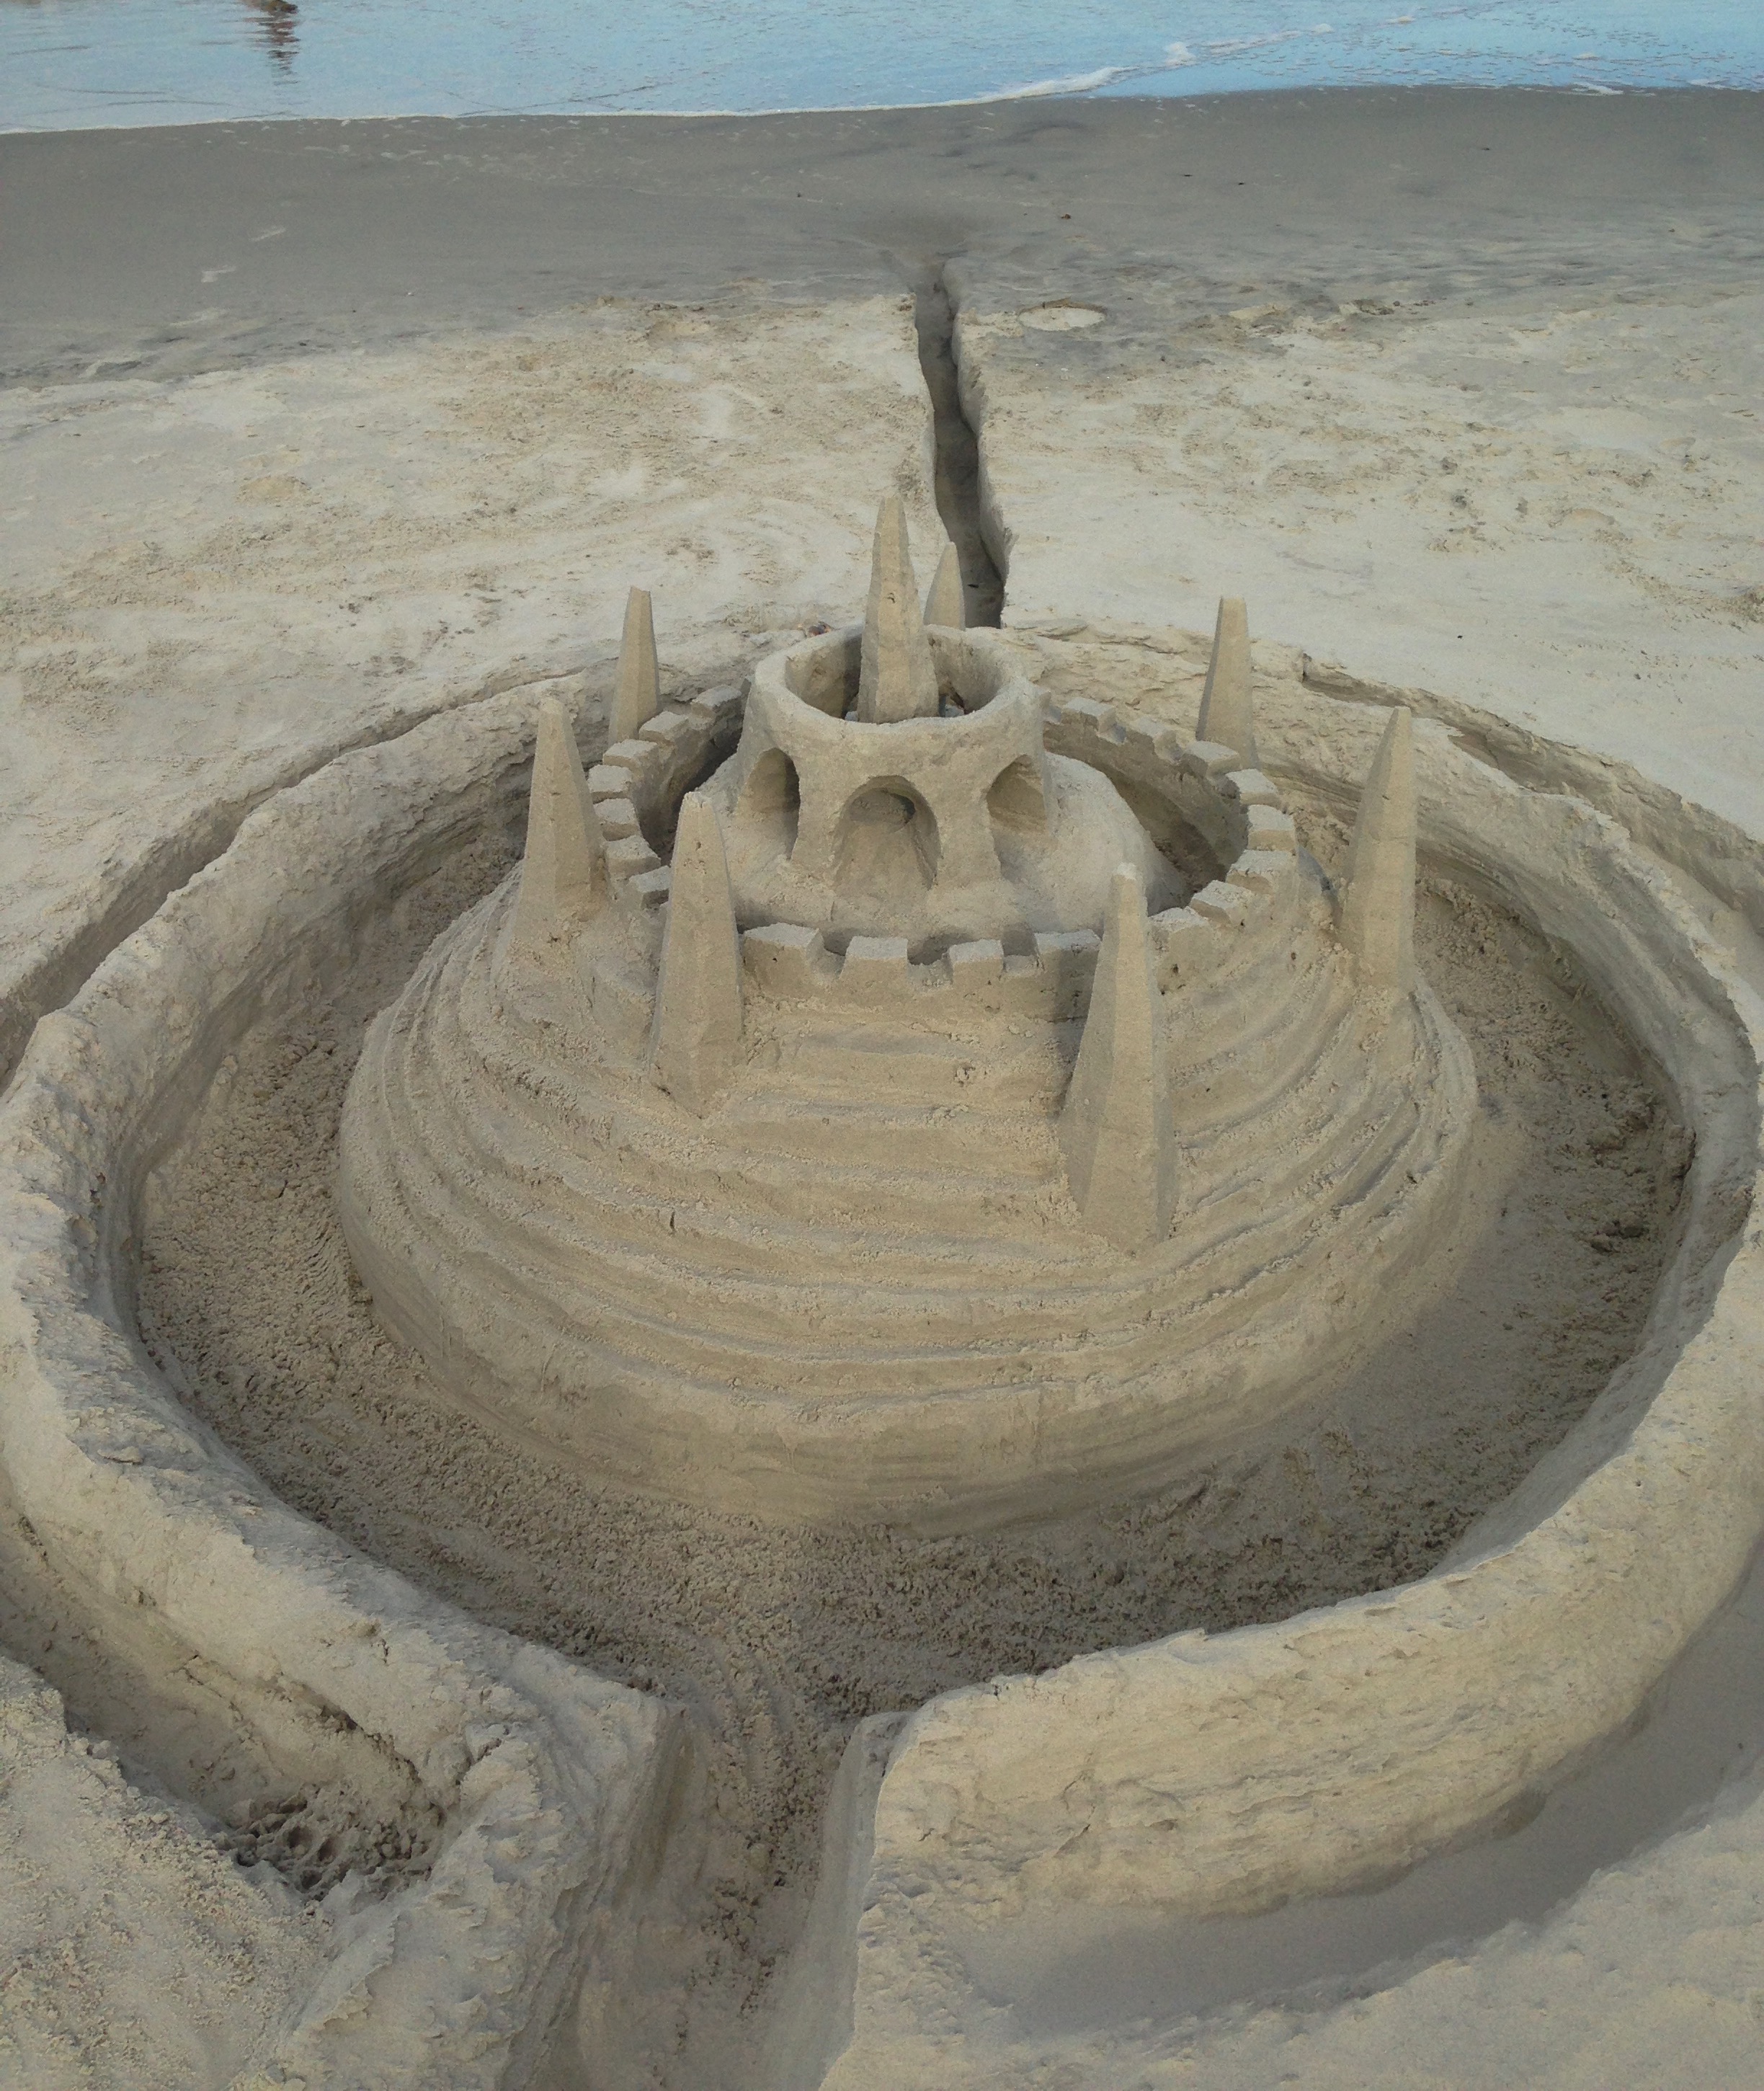 Sandcastle - Top view